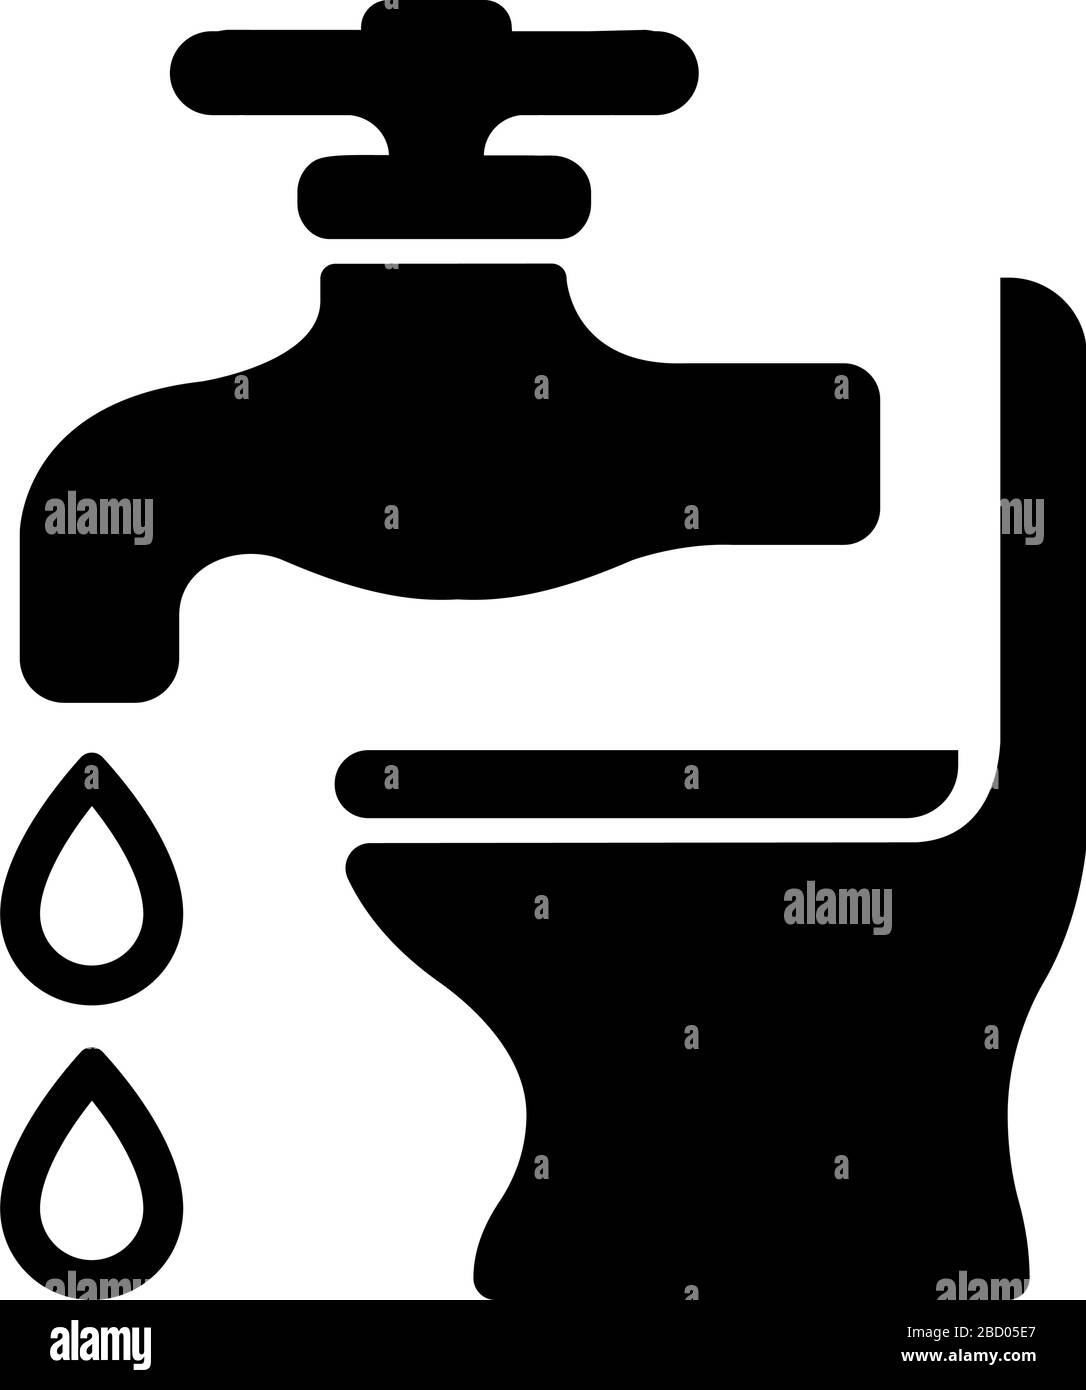 Plumbing, bathroom, water-related equipment icon Stock Vector